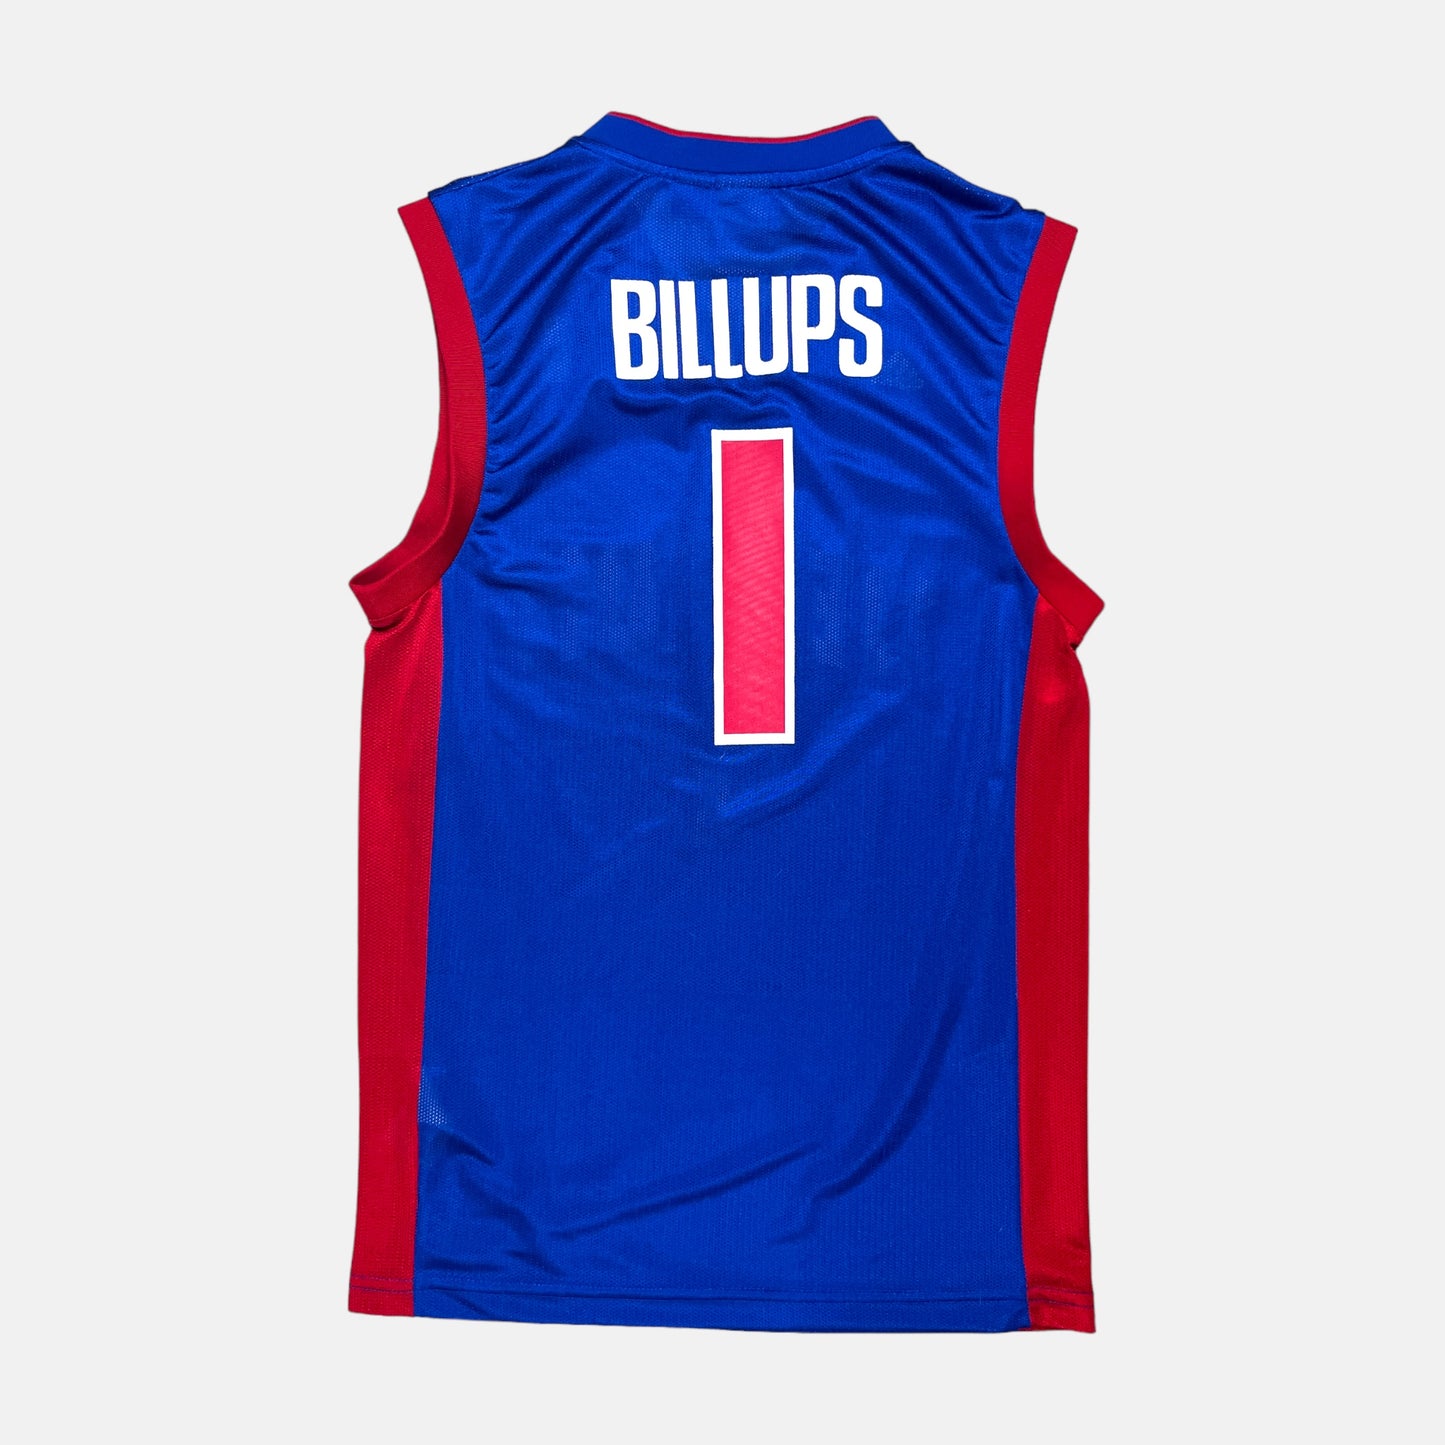 Detroit Pistons - Chauncey Billups - Größe S - Adidas - NBA Trikot